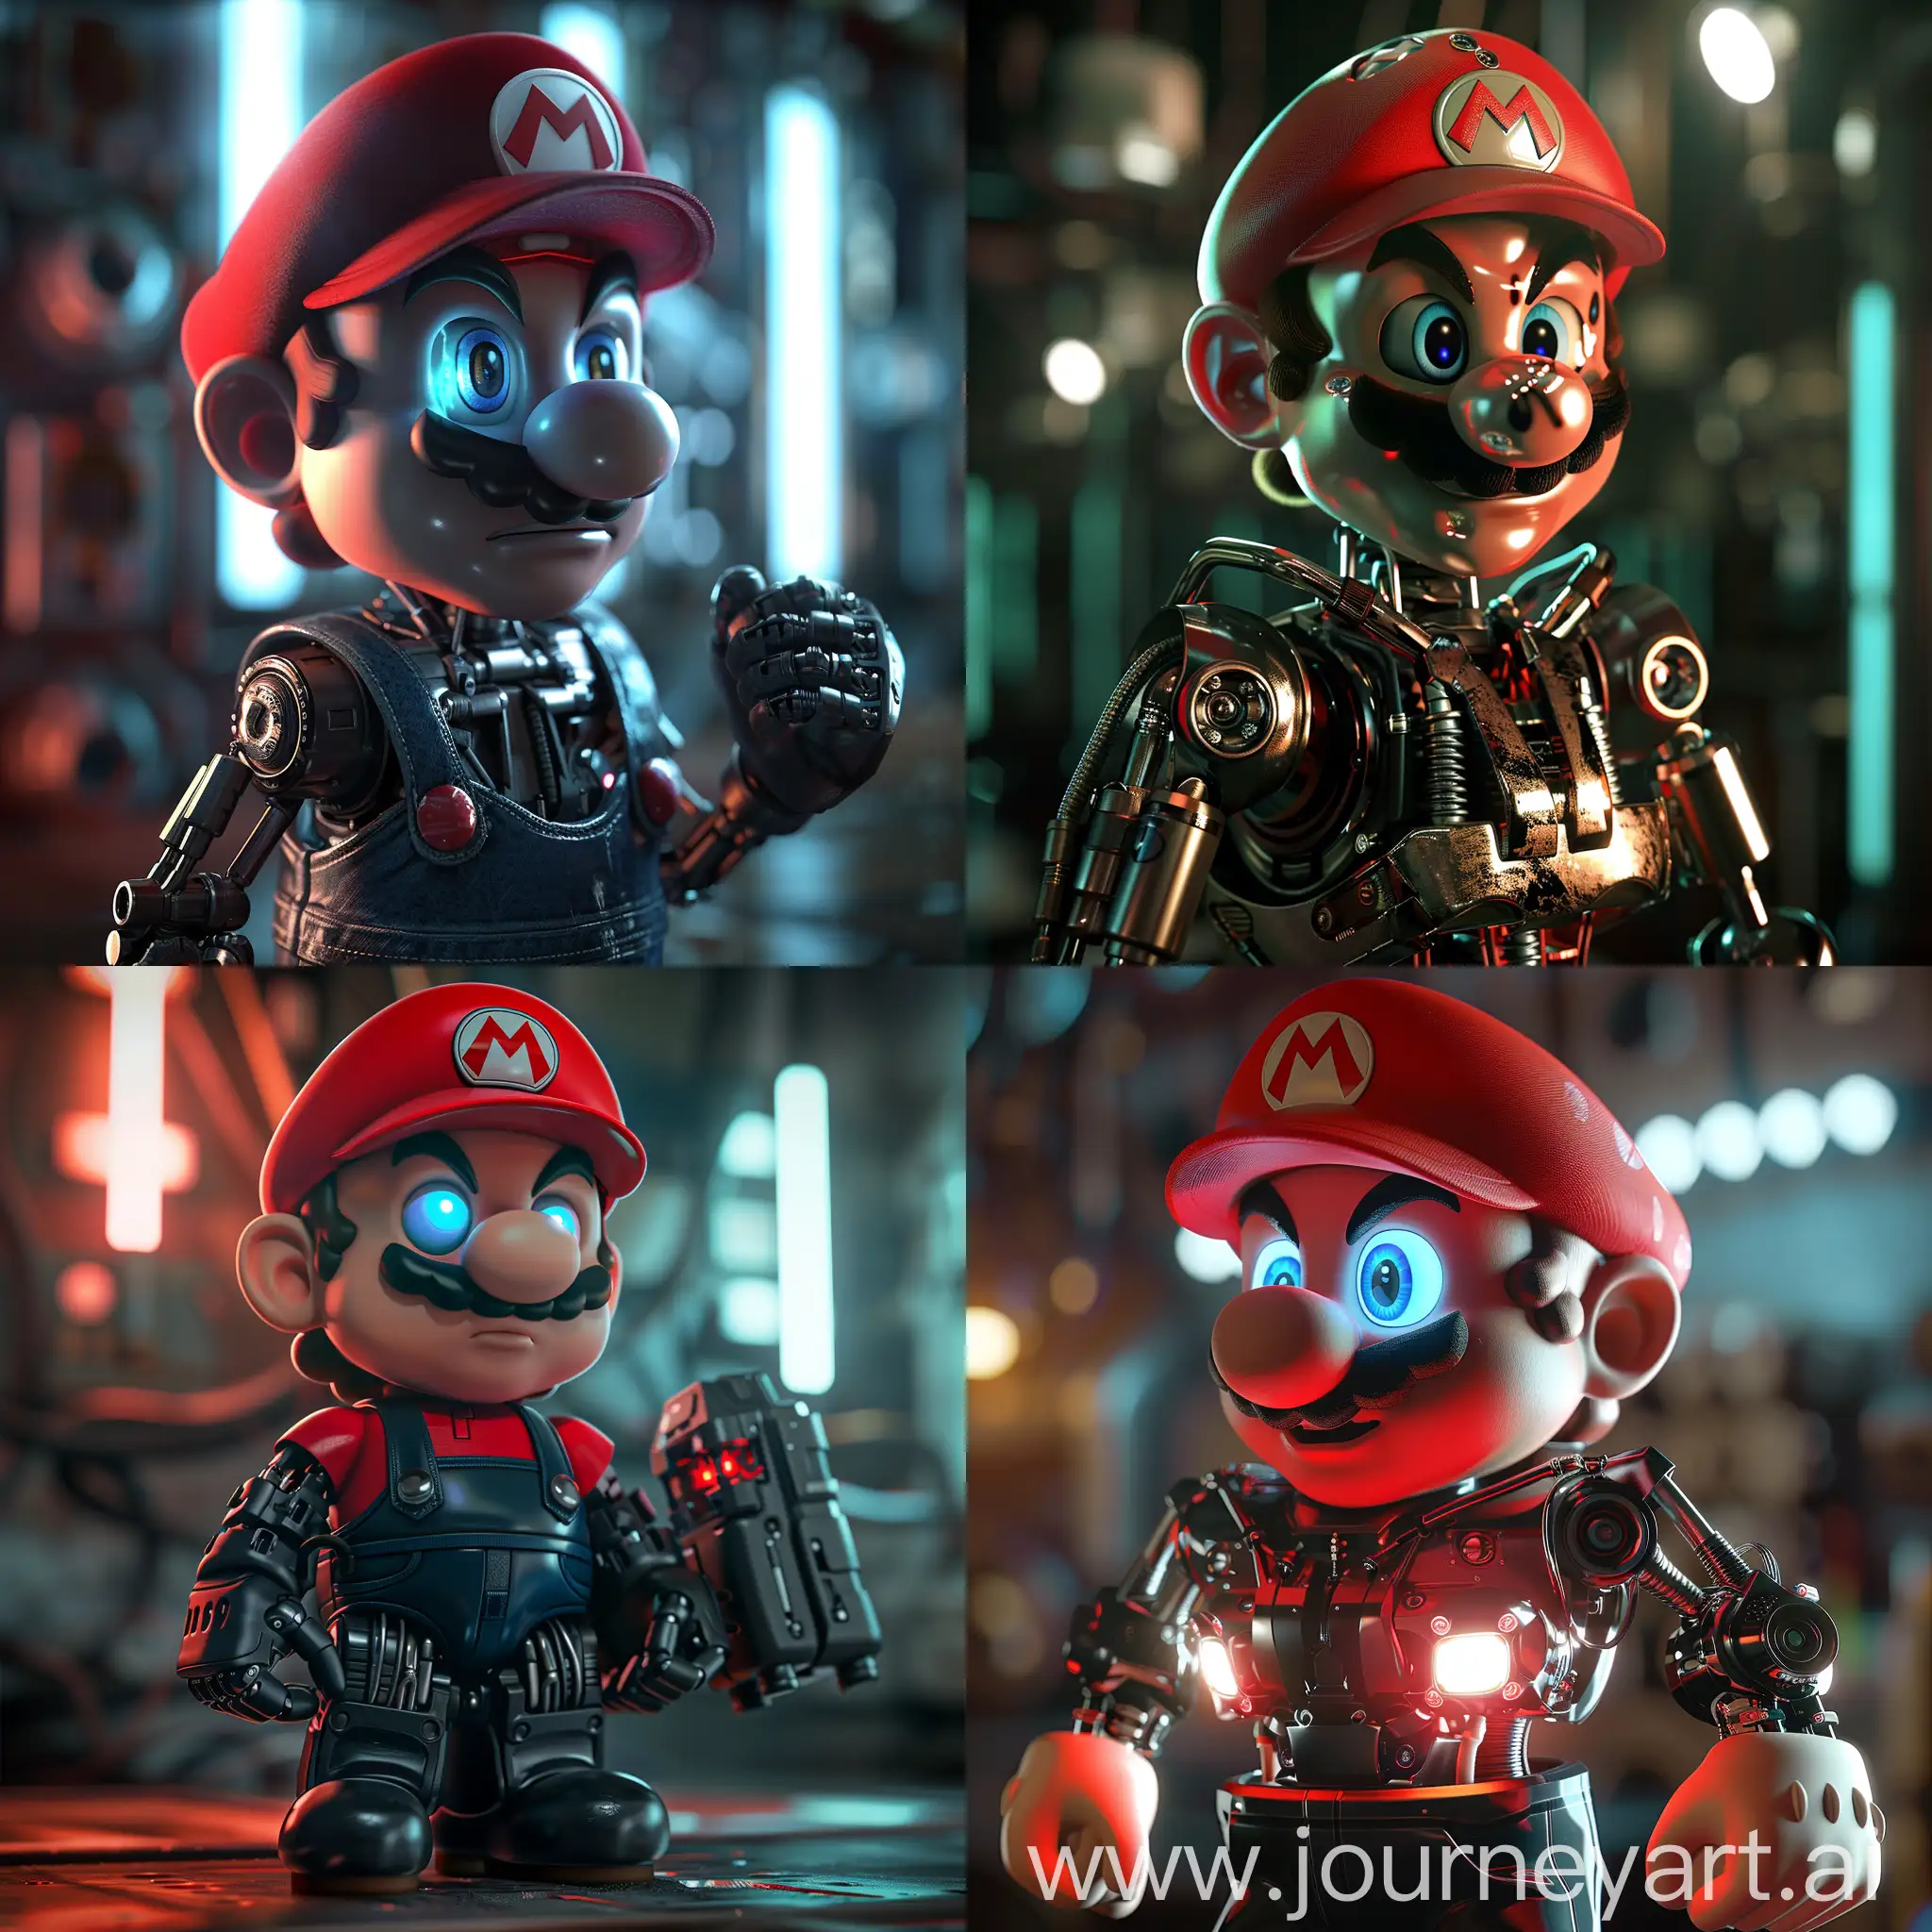 Super Mario as a t-800 terminator, cinematic lighting, photorealistic